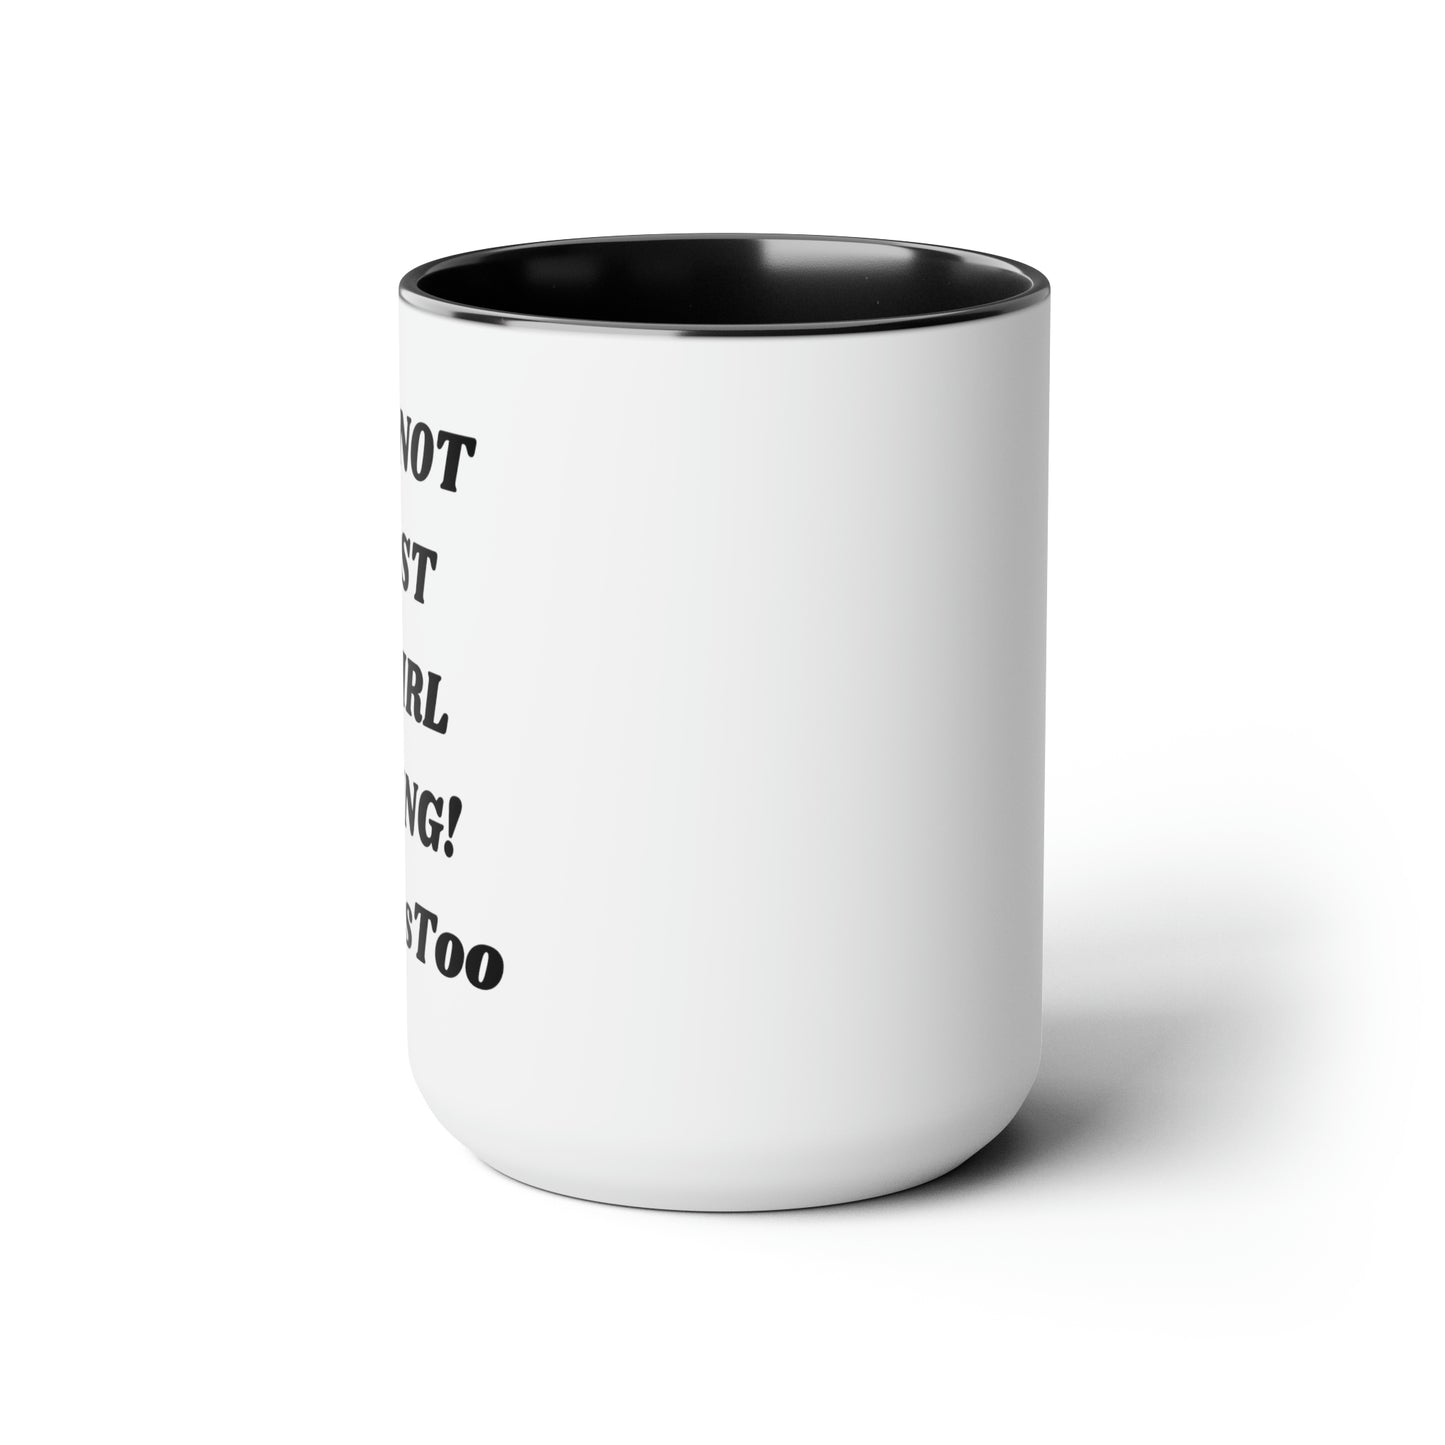 Not Just a Girl Thing ~ Black Txt Two-Tone Coffee Mugs, 15oz